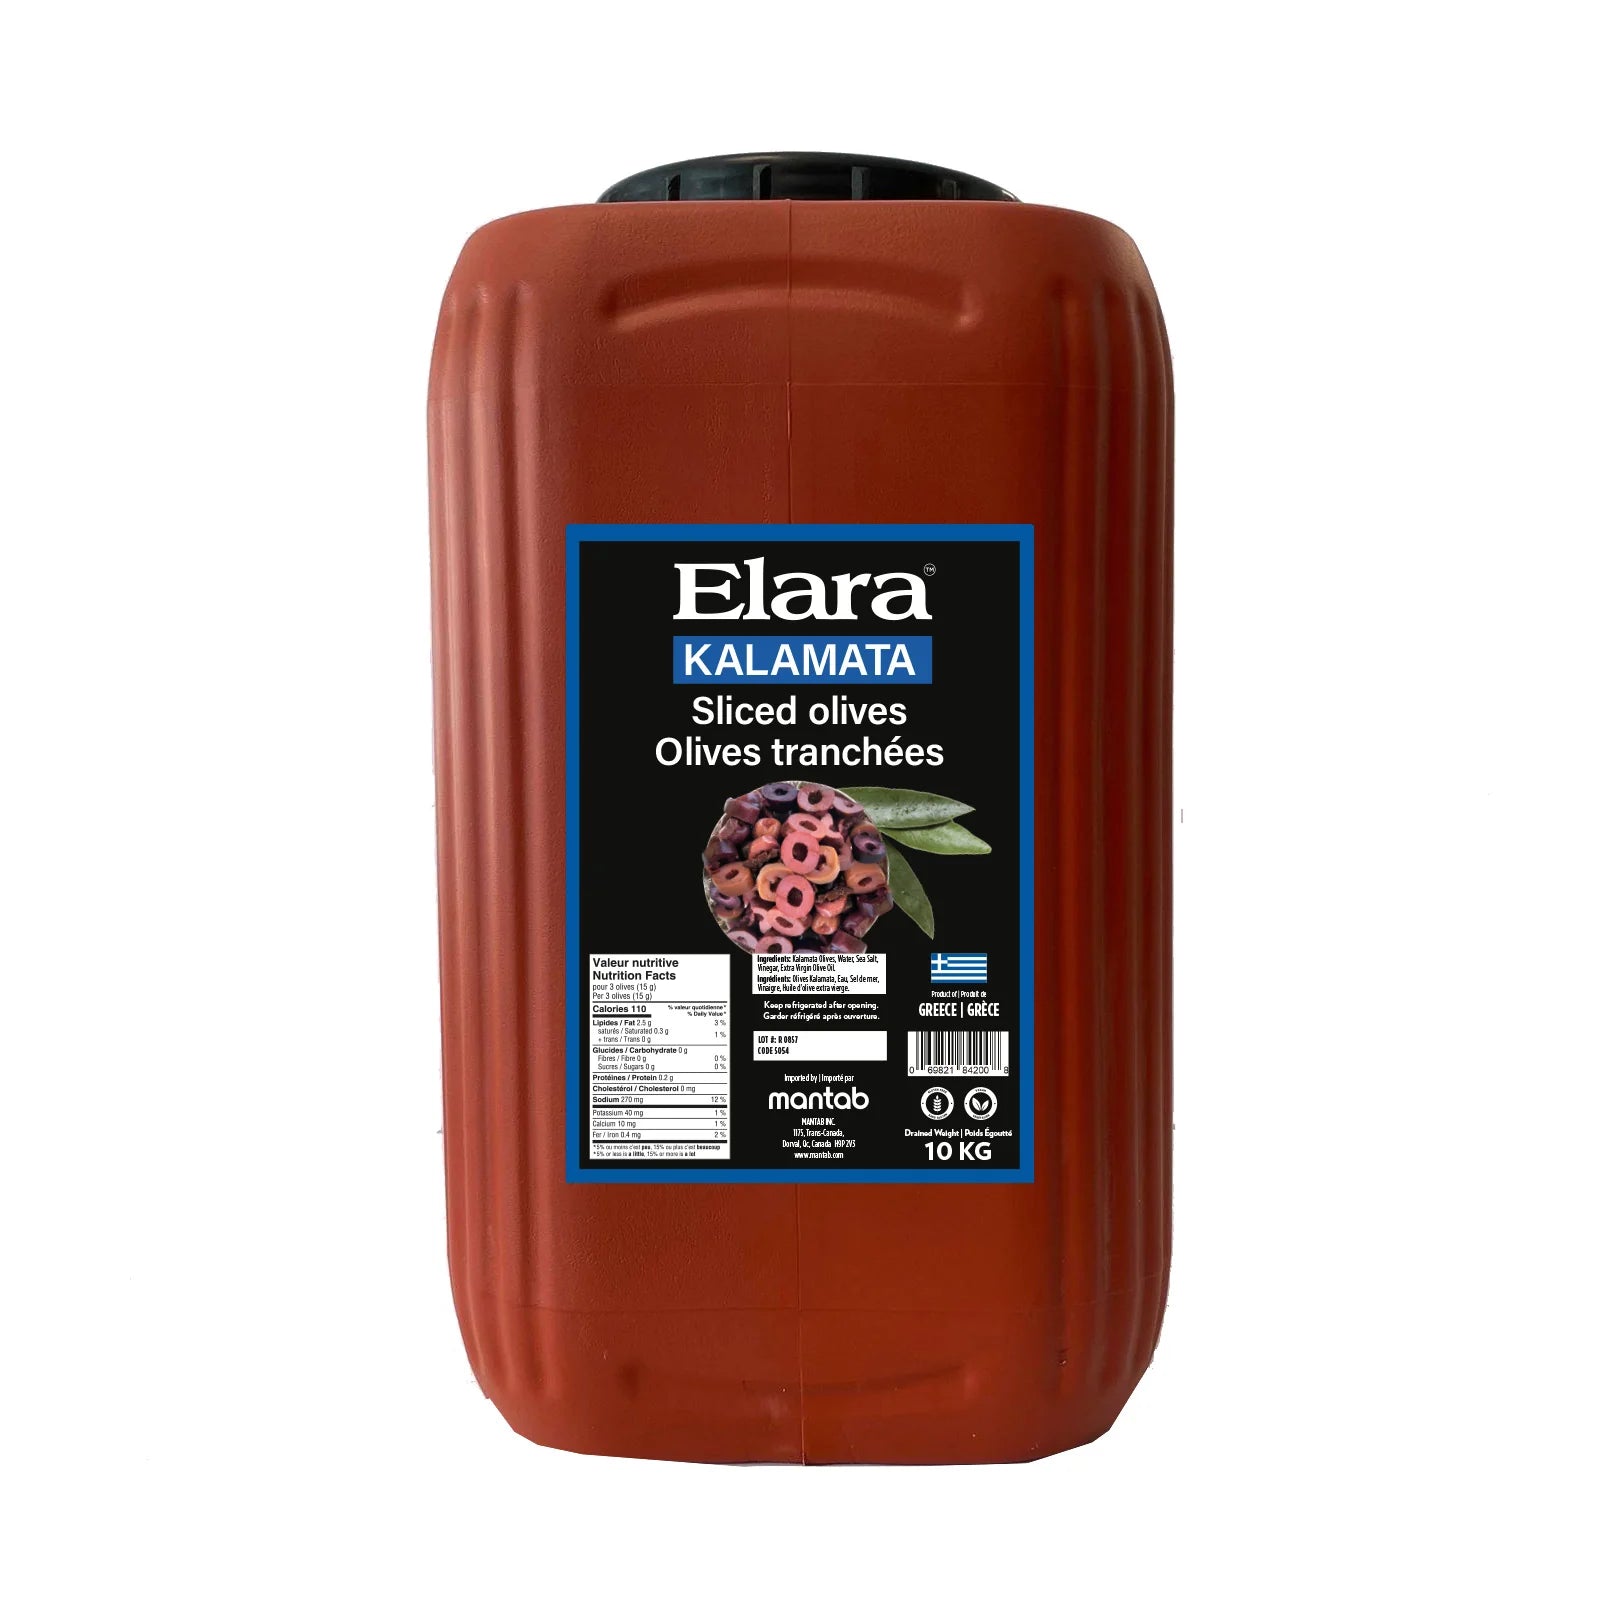 Elara - Olives - Kalamata - Sliced